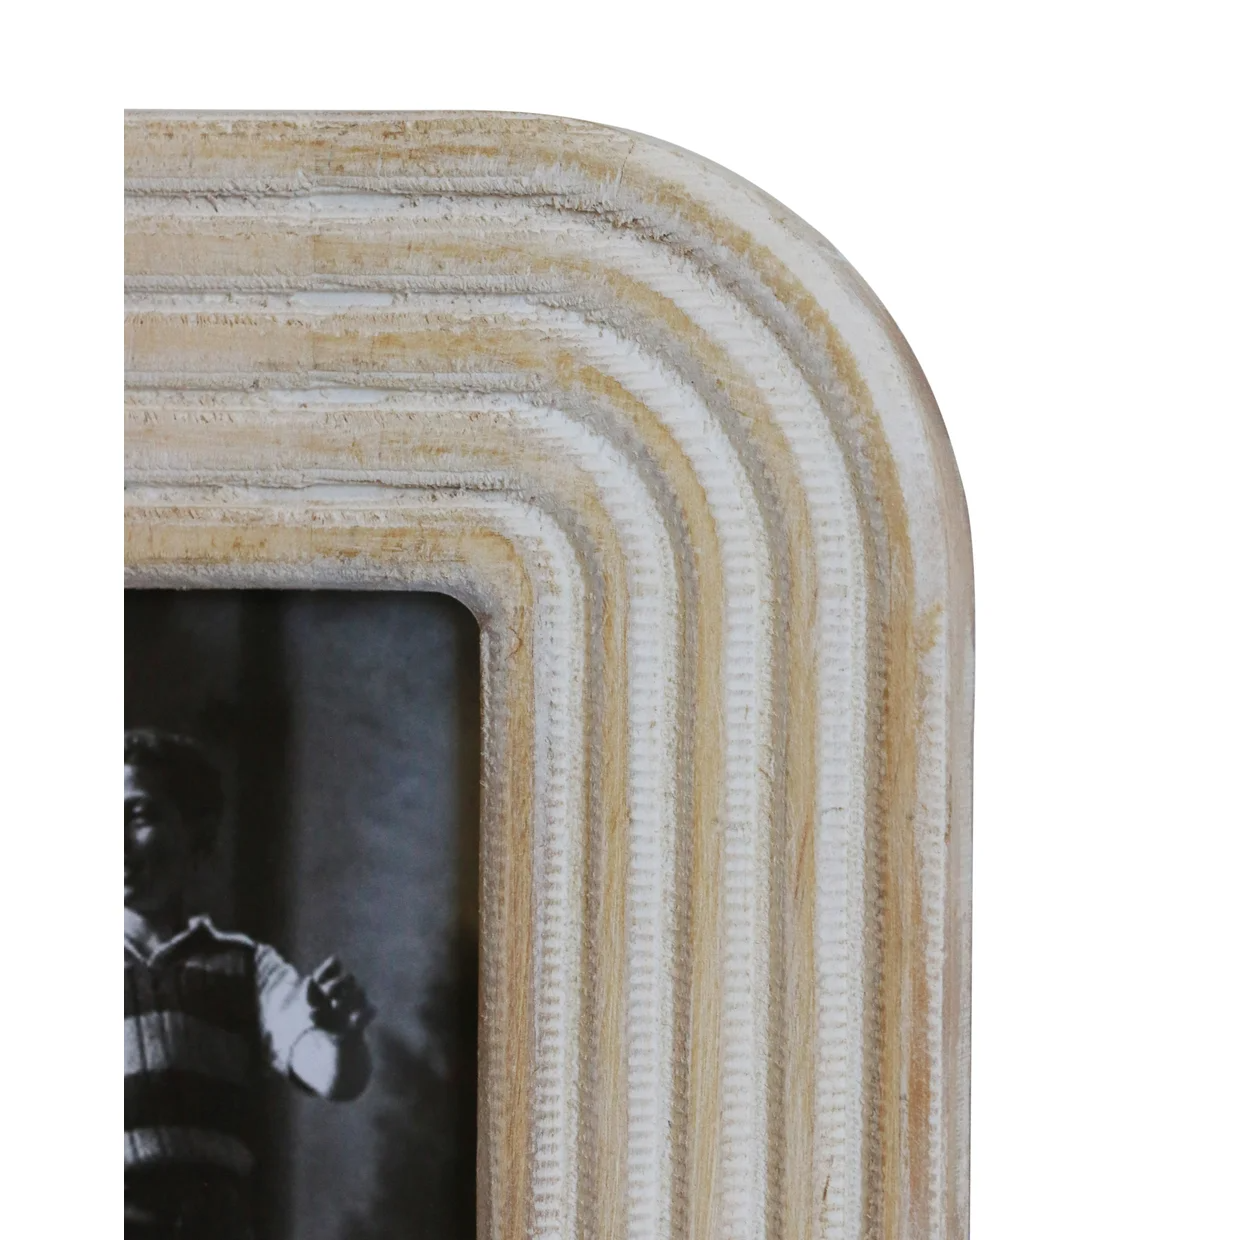 Wooden Photo Frame with Ridged Detail - 5x7" | CC Interiors | Avisons